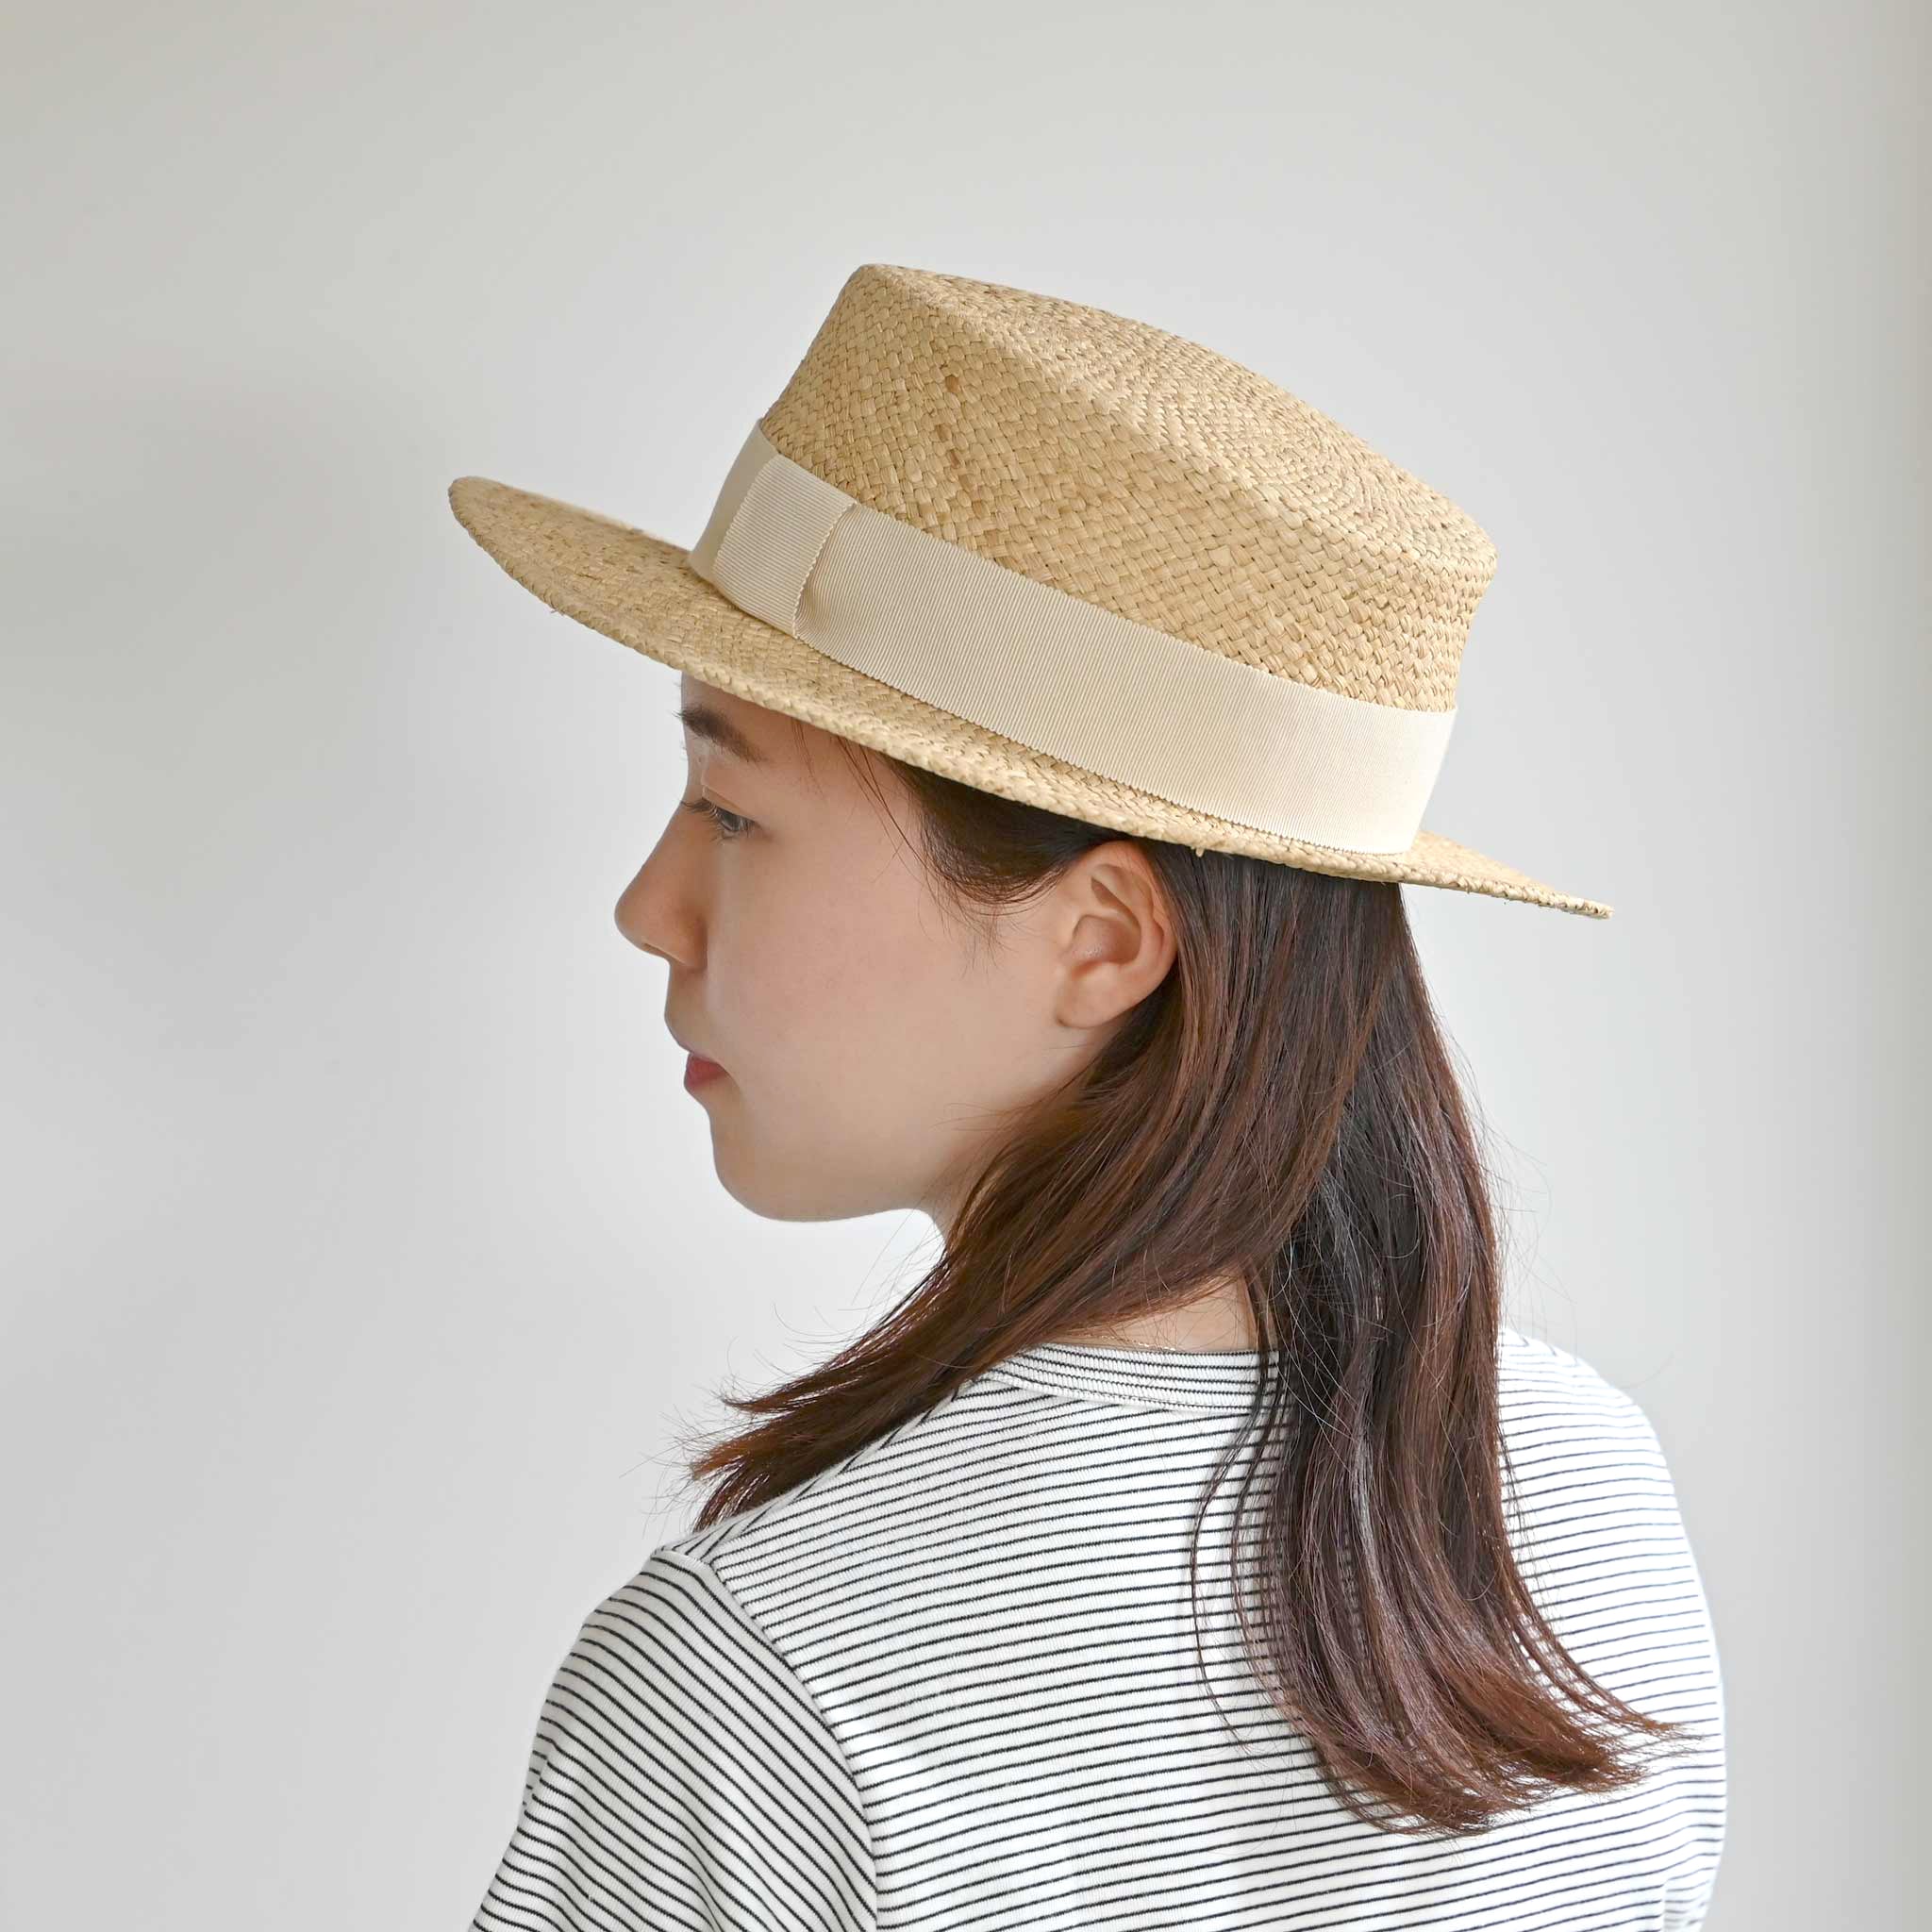 POP UP】日本製の麦わら帽子を展開する石田製帽の商品を期間限定で販売。